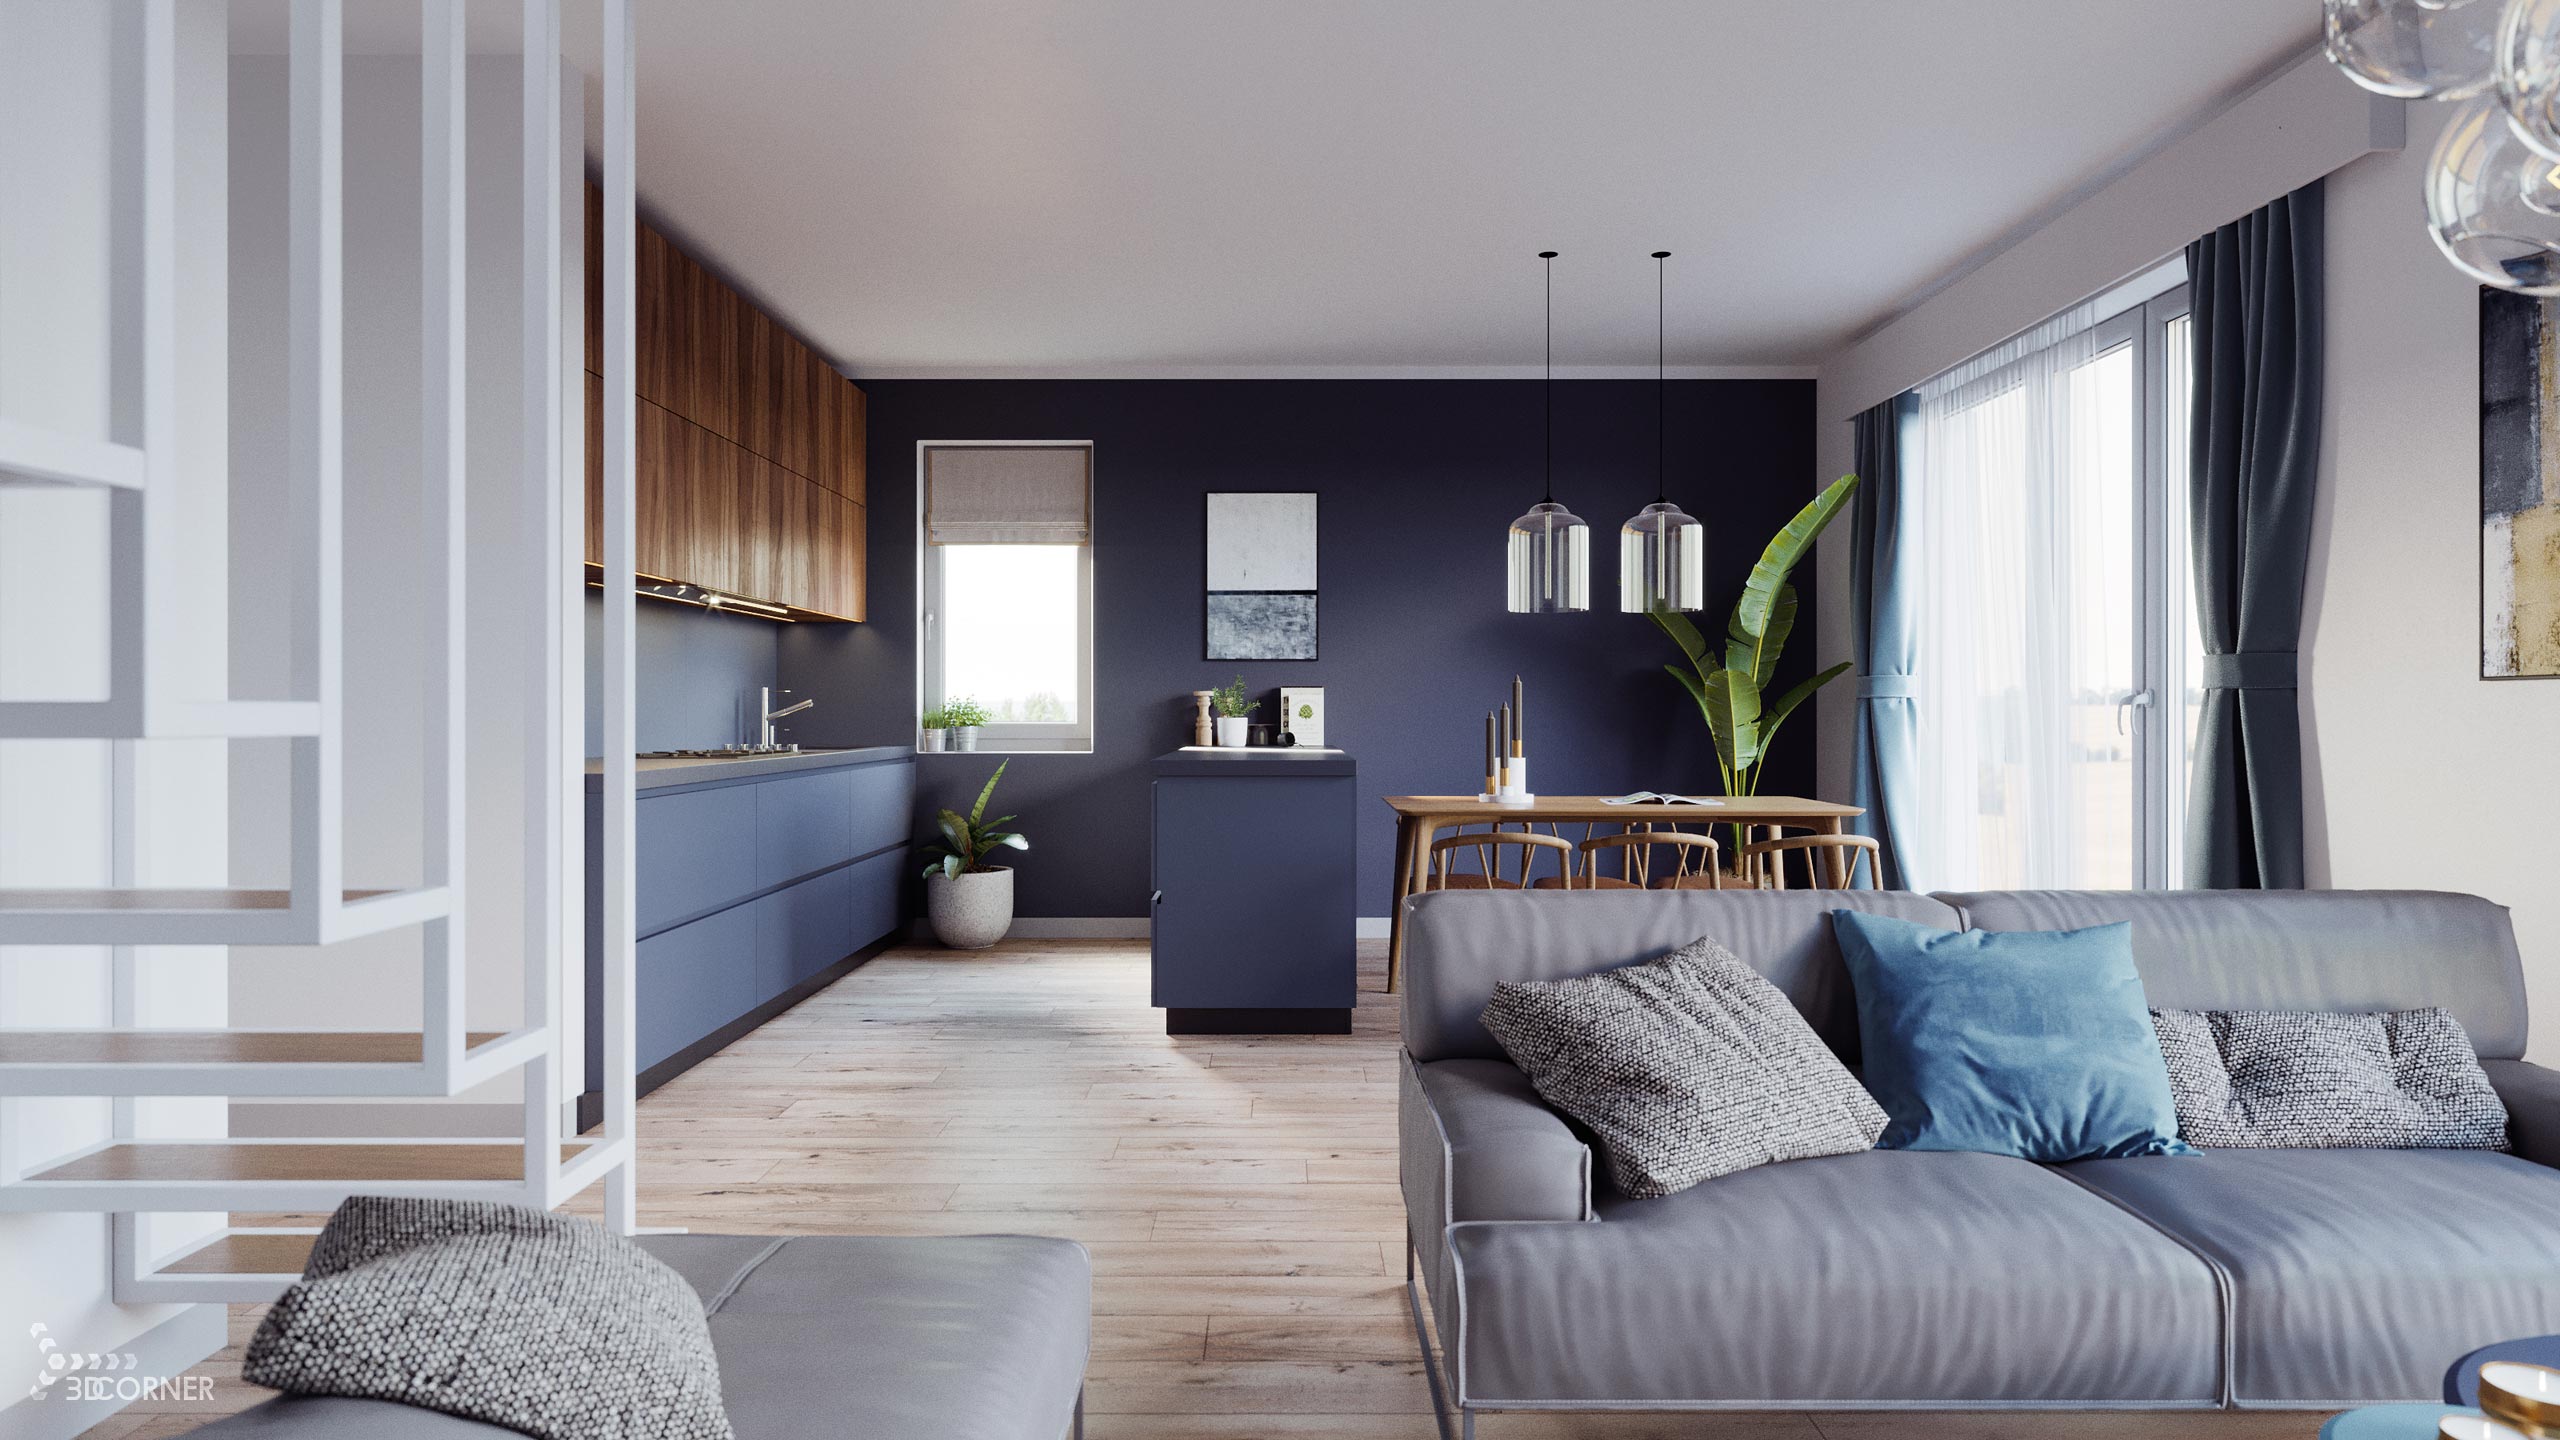 visualization interior photorealistic modern salon kitchen white navy blue wood 3dcorner